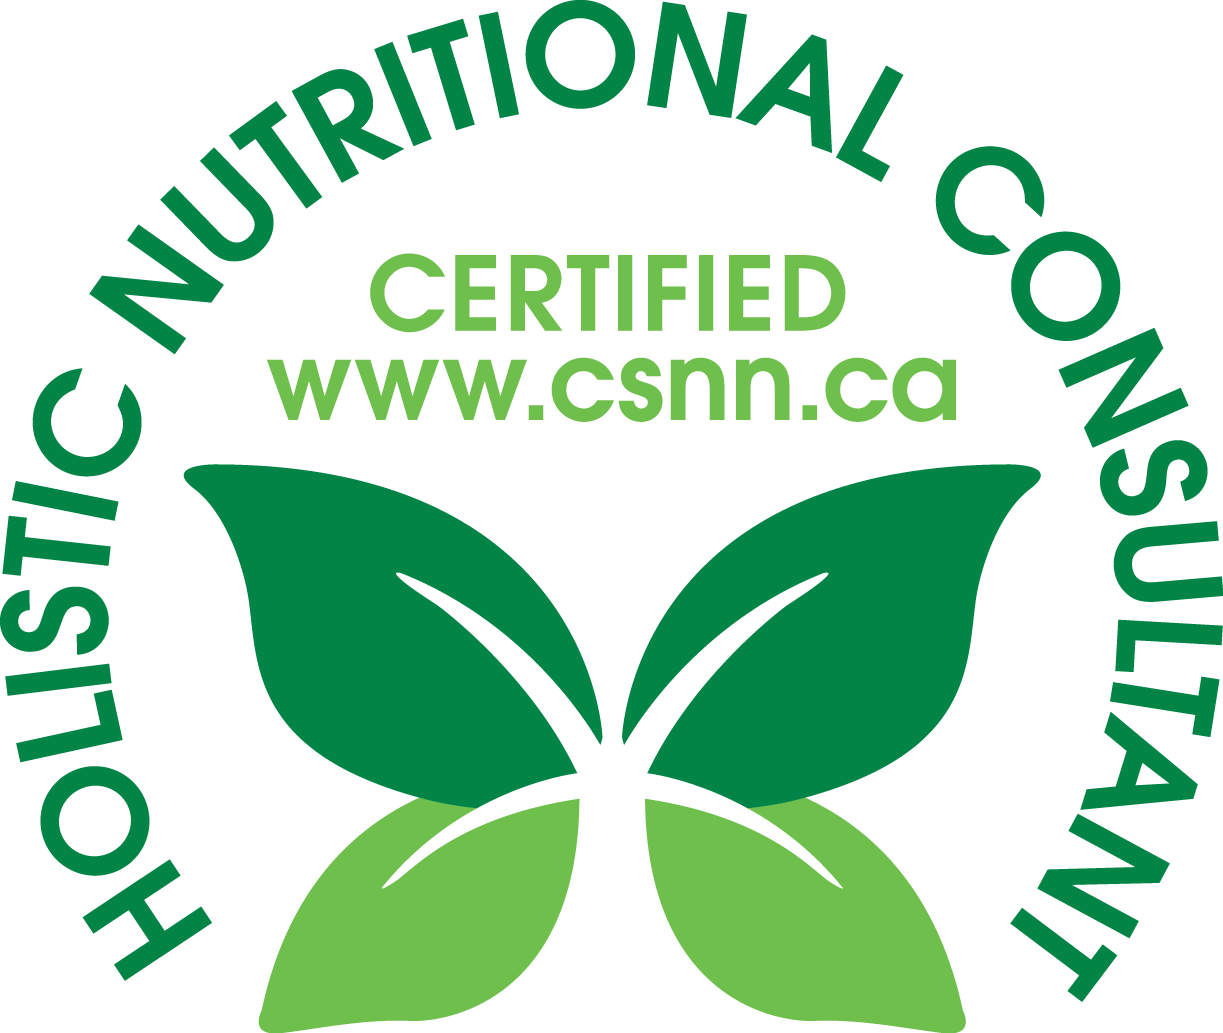 CSNN-Certification-Mark-lg.png